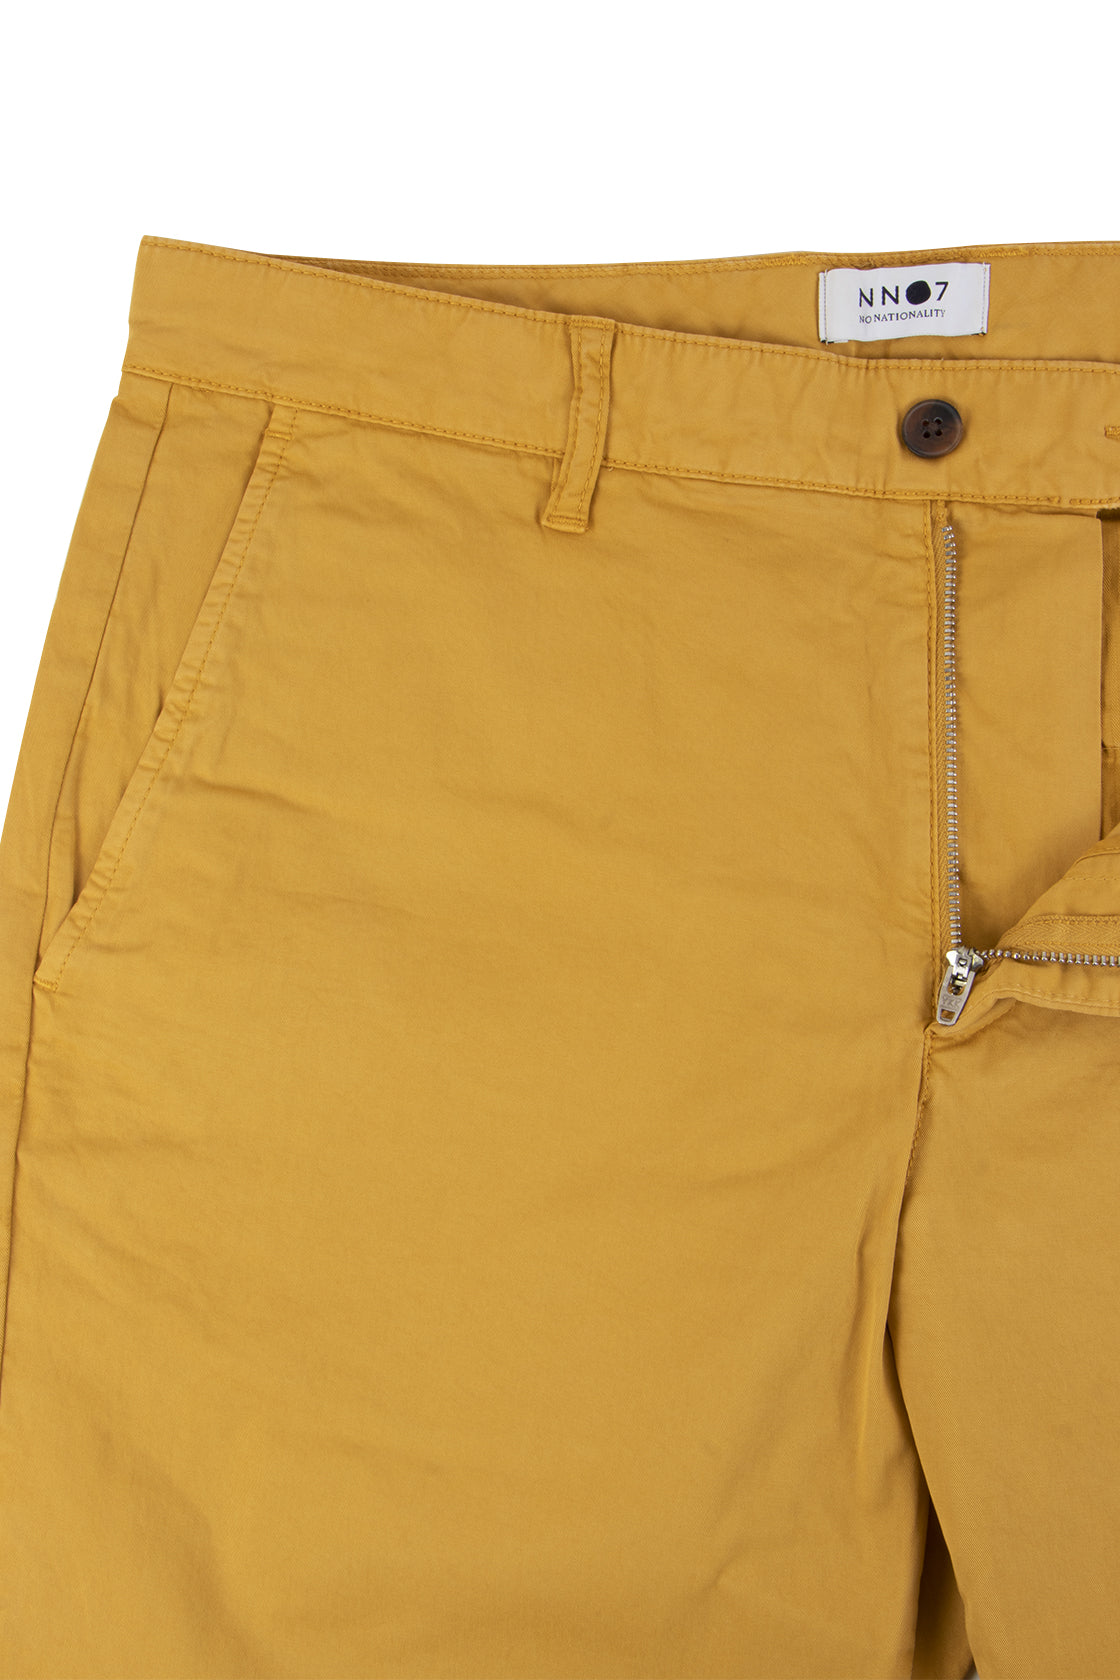 NN07 Crown Shorts Warm Yellow